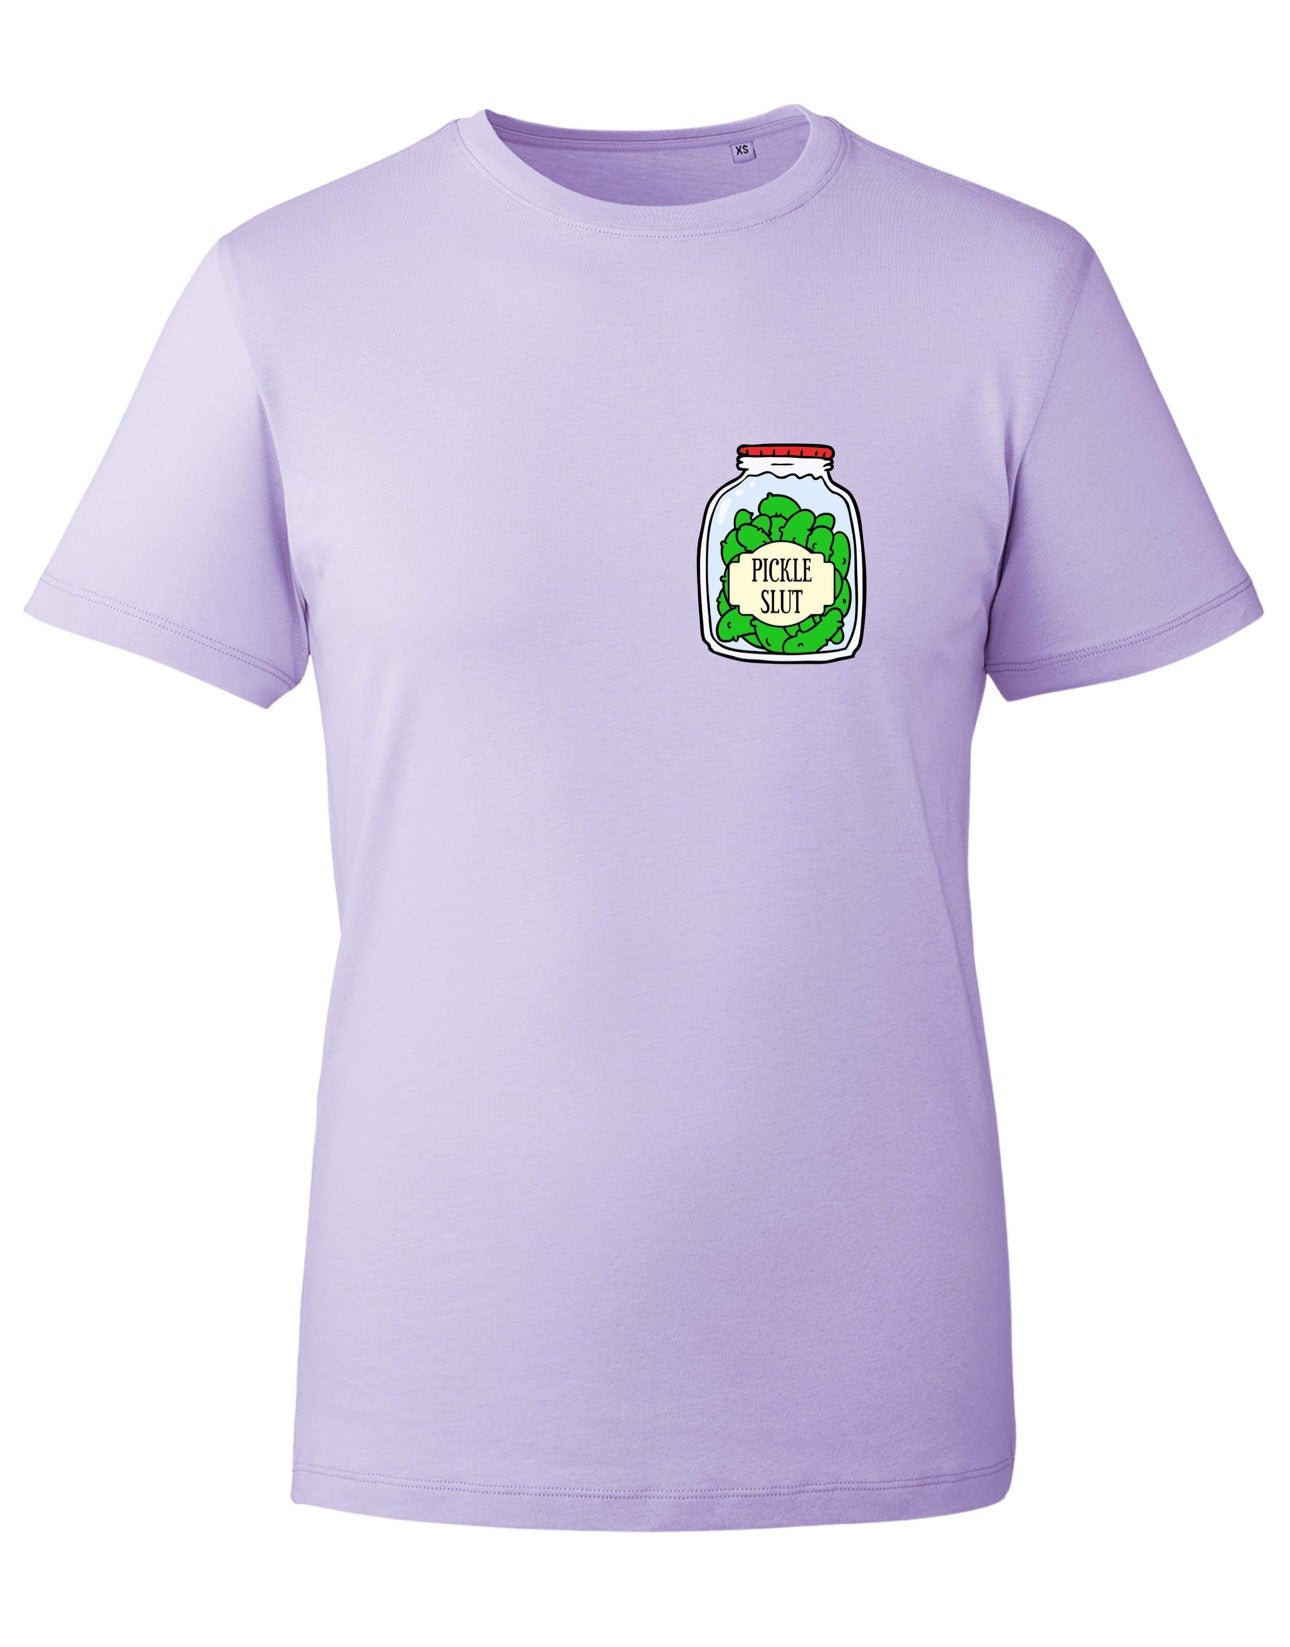 "Pickle Slut" Unisex Organic T-Shirt